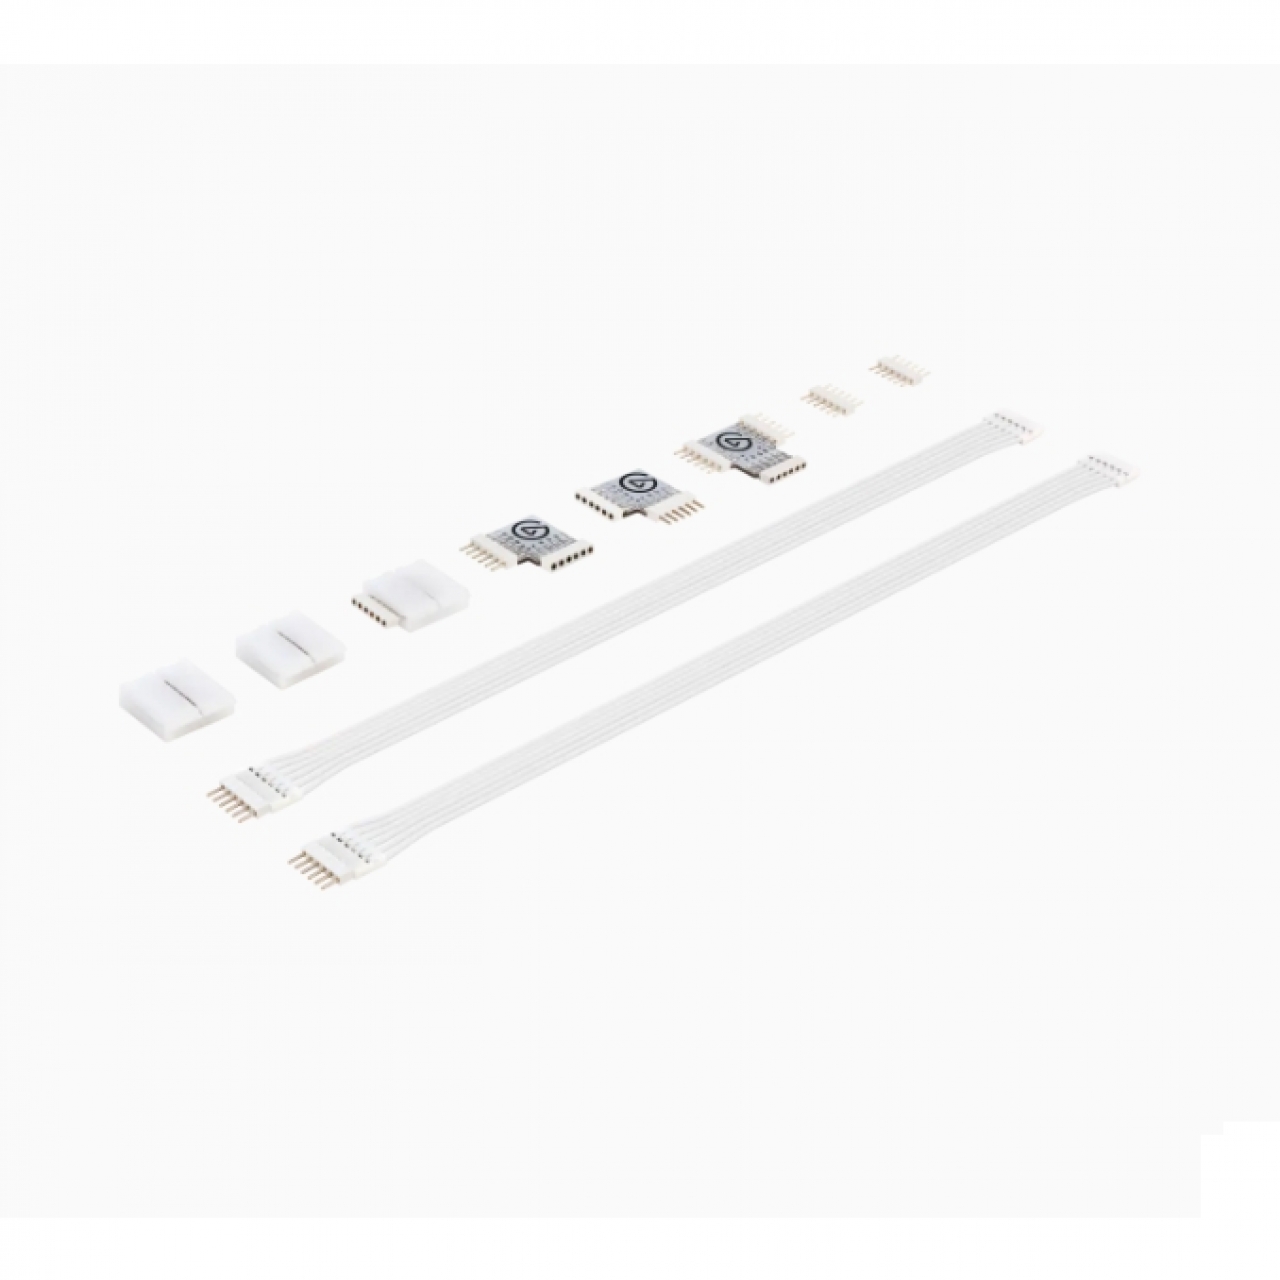 CORSAIR 10LAF9901 - Elgato Light Strip Connector Set